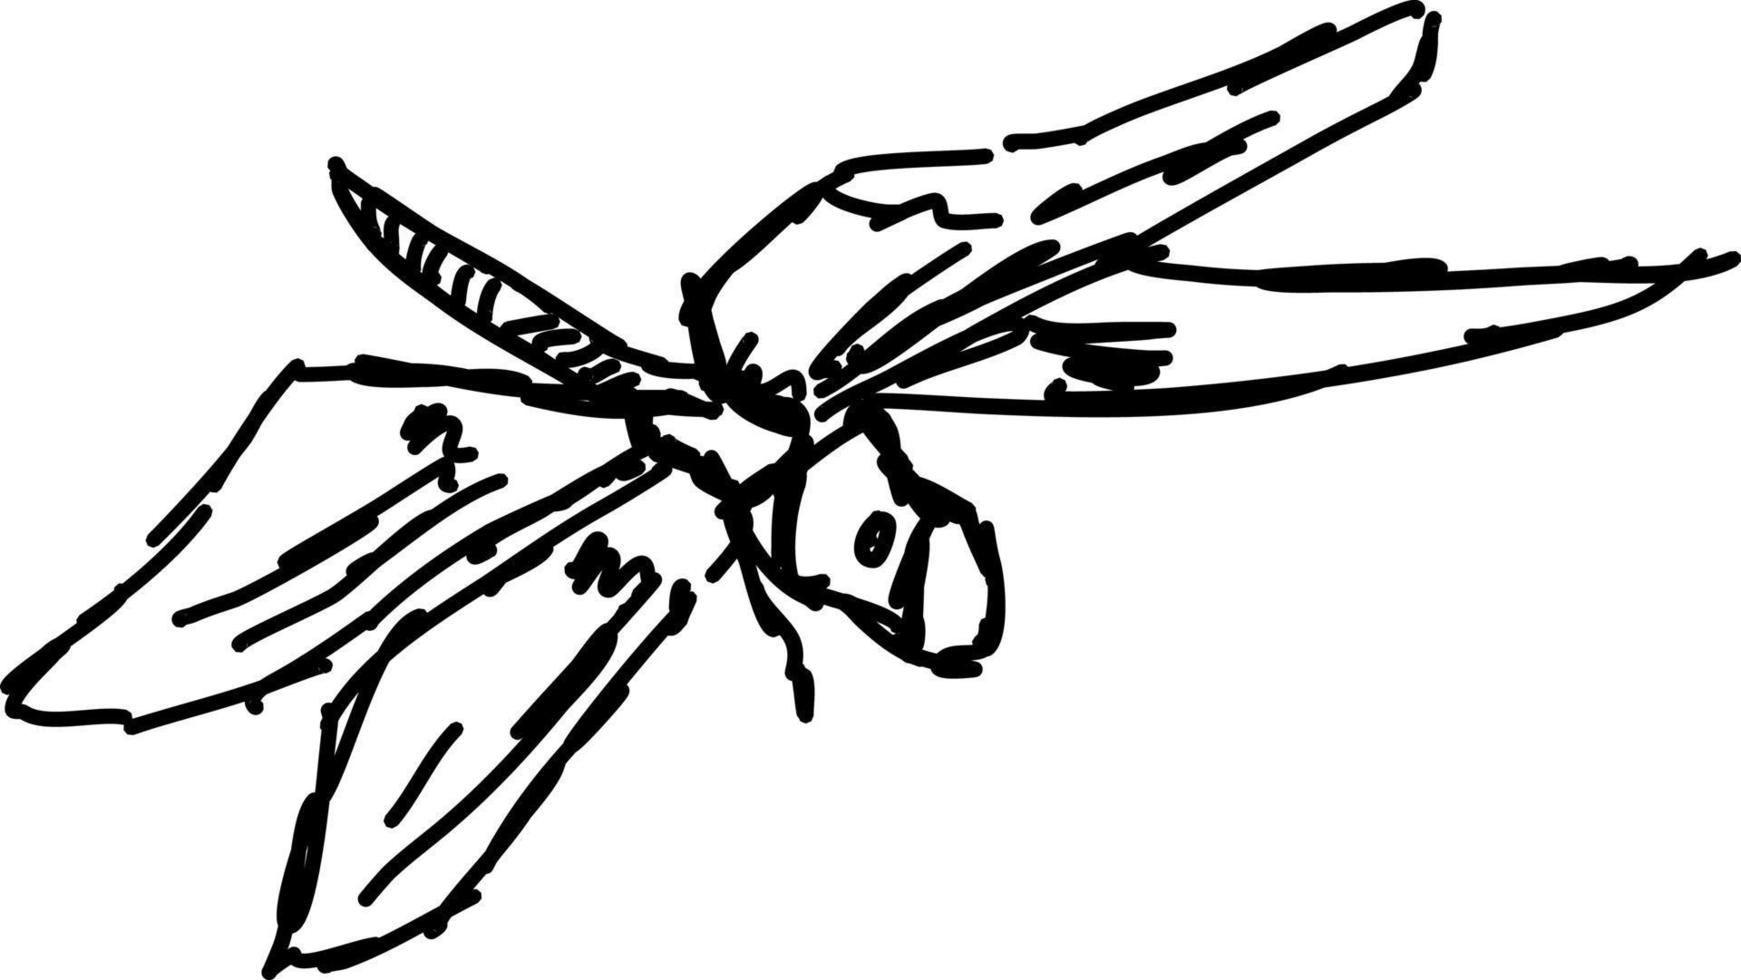 Dragonfly sketch, illustration, vector on white background.